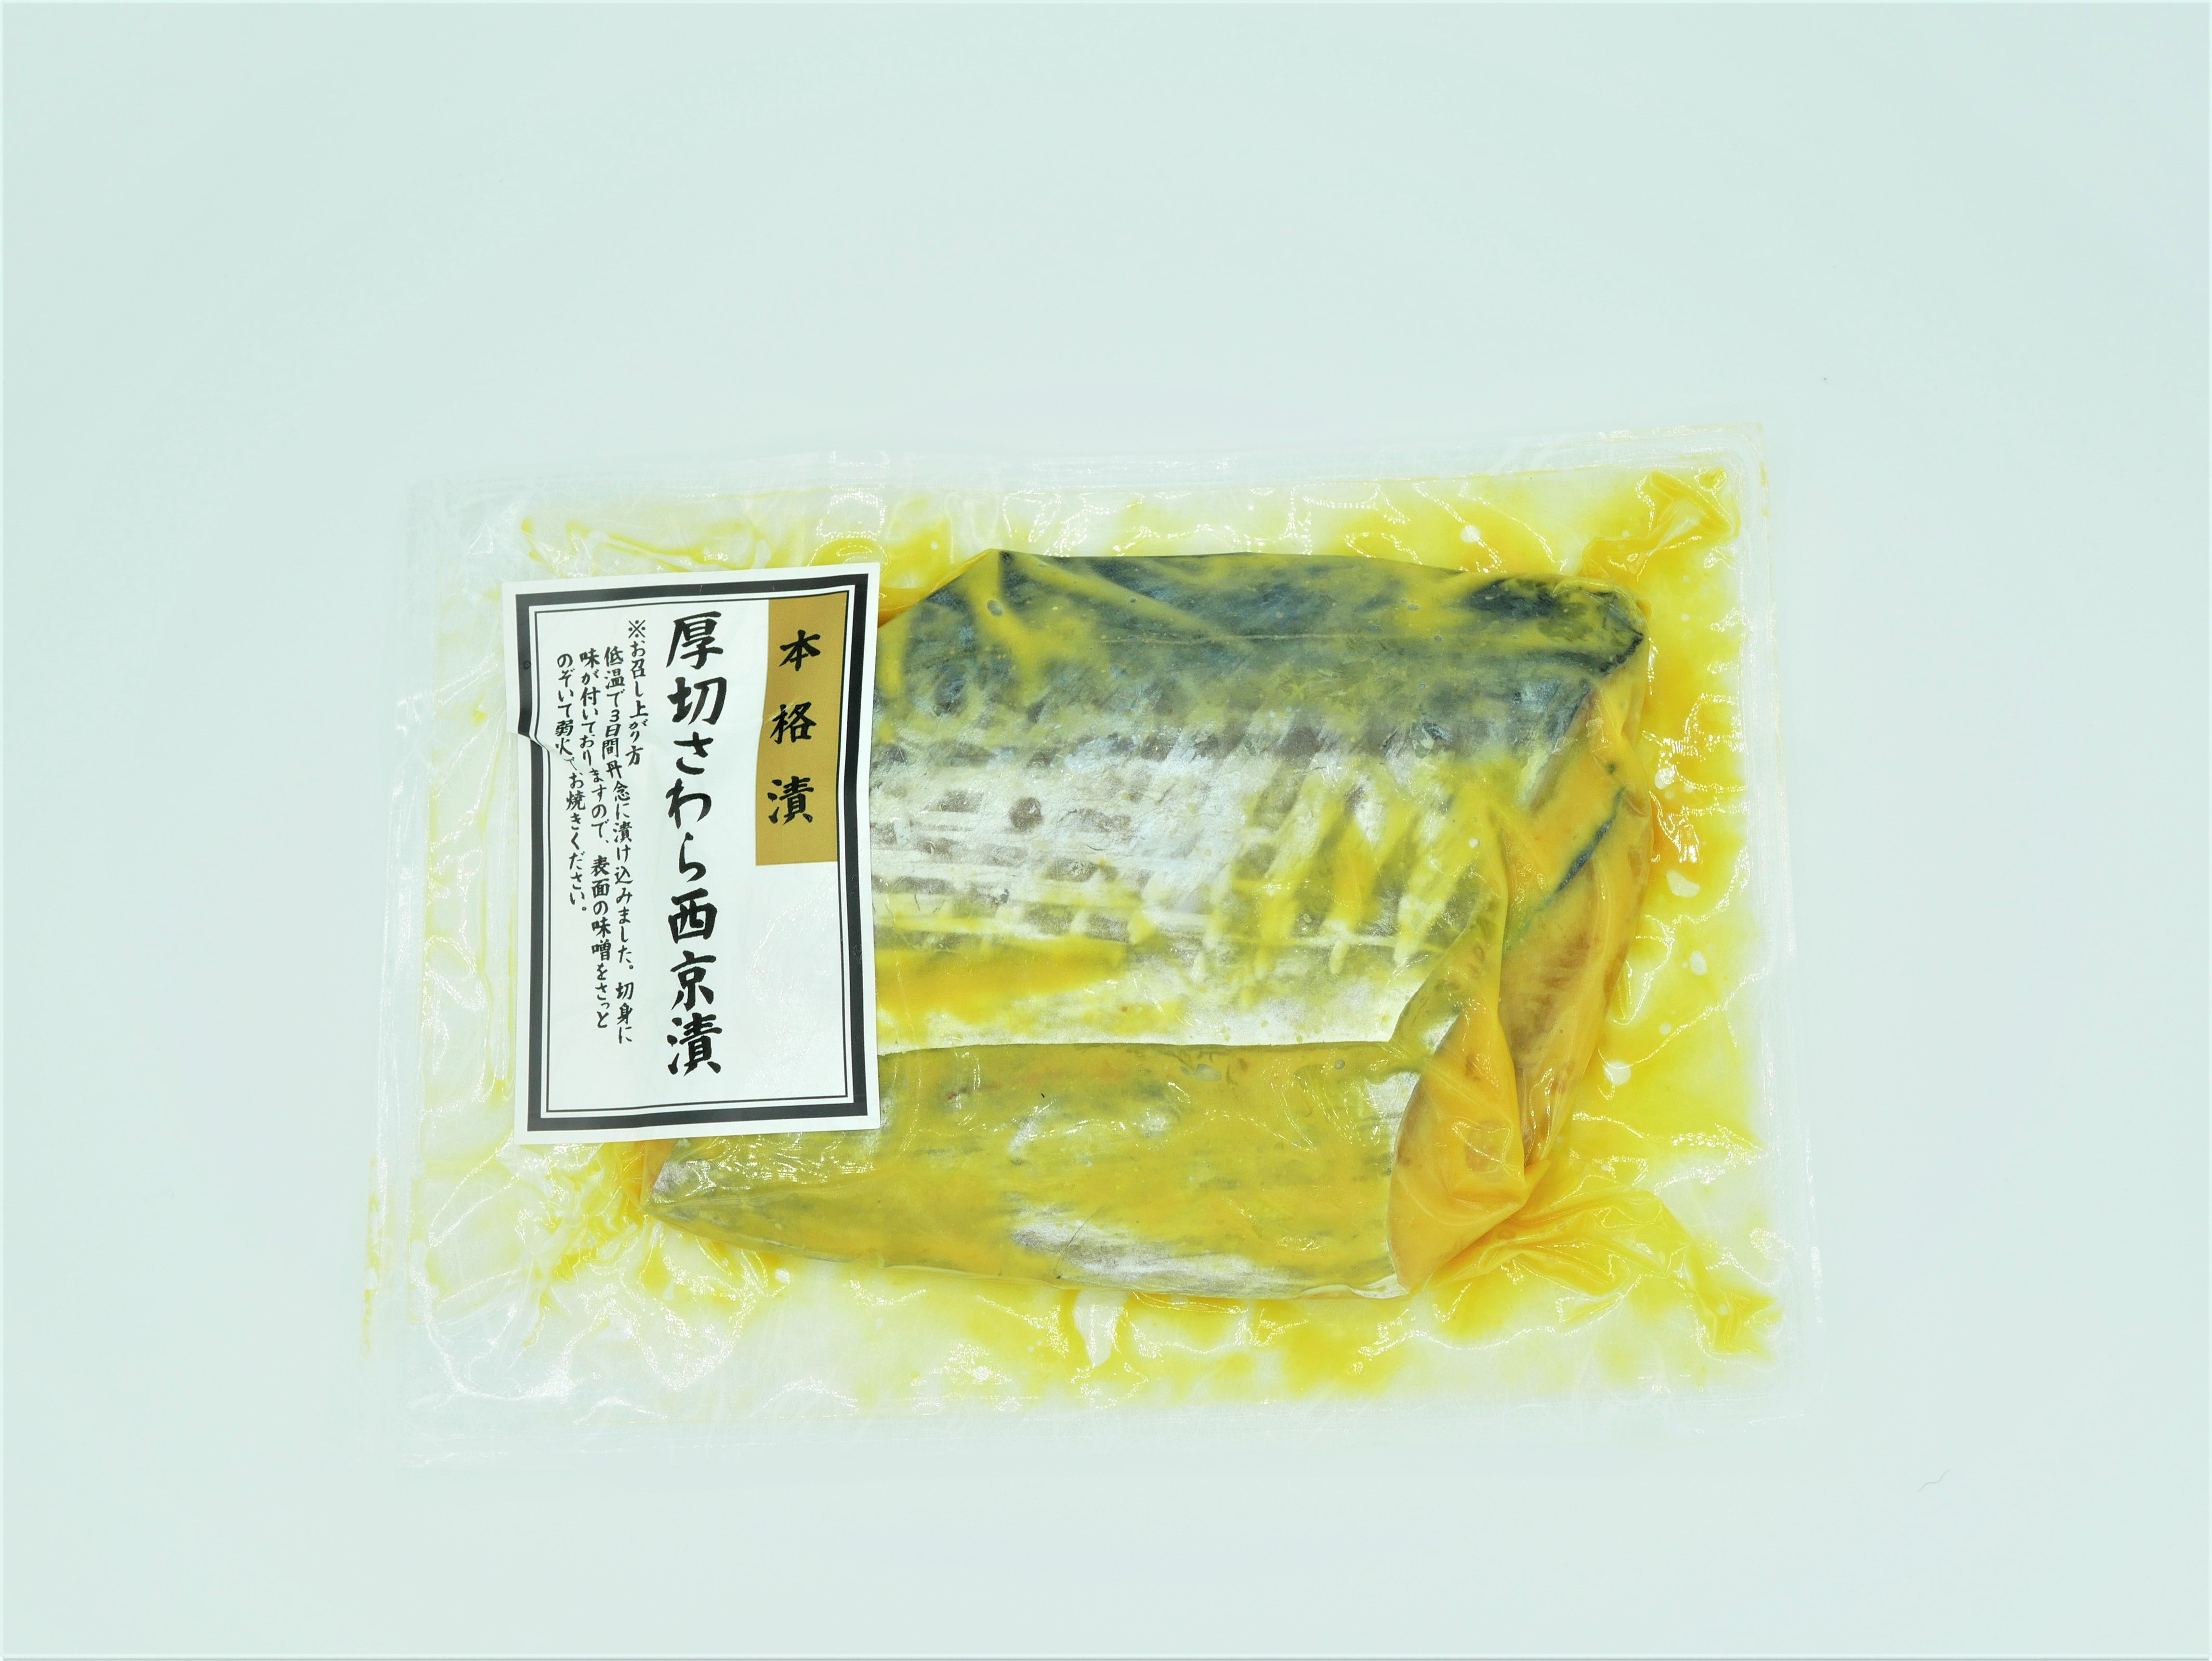 "Sawara" Kyoto-miso style (Spring mackerel) 　成城石井御用達！ 厚切サワラ西京漬